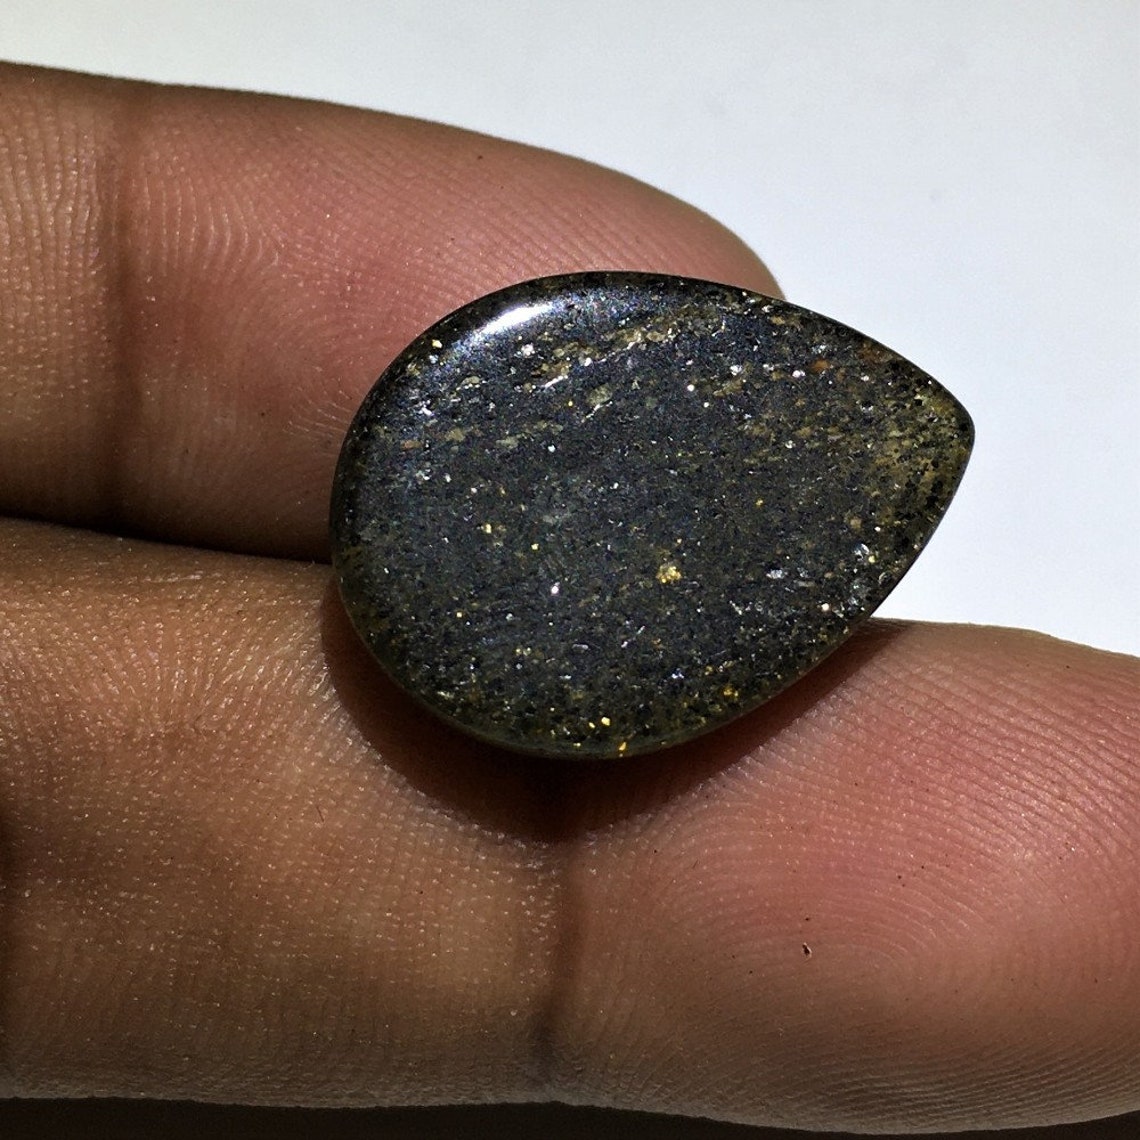 Top Rare Black Sunstone Quartz Gemstone 100 Natural Black Etsy